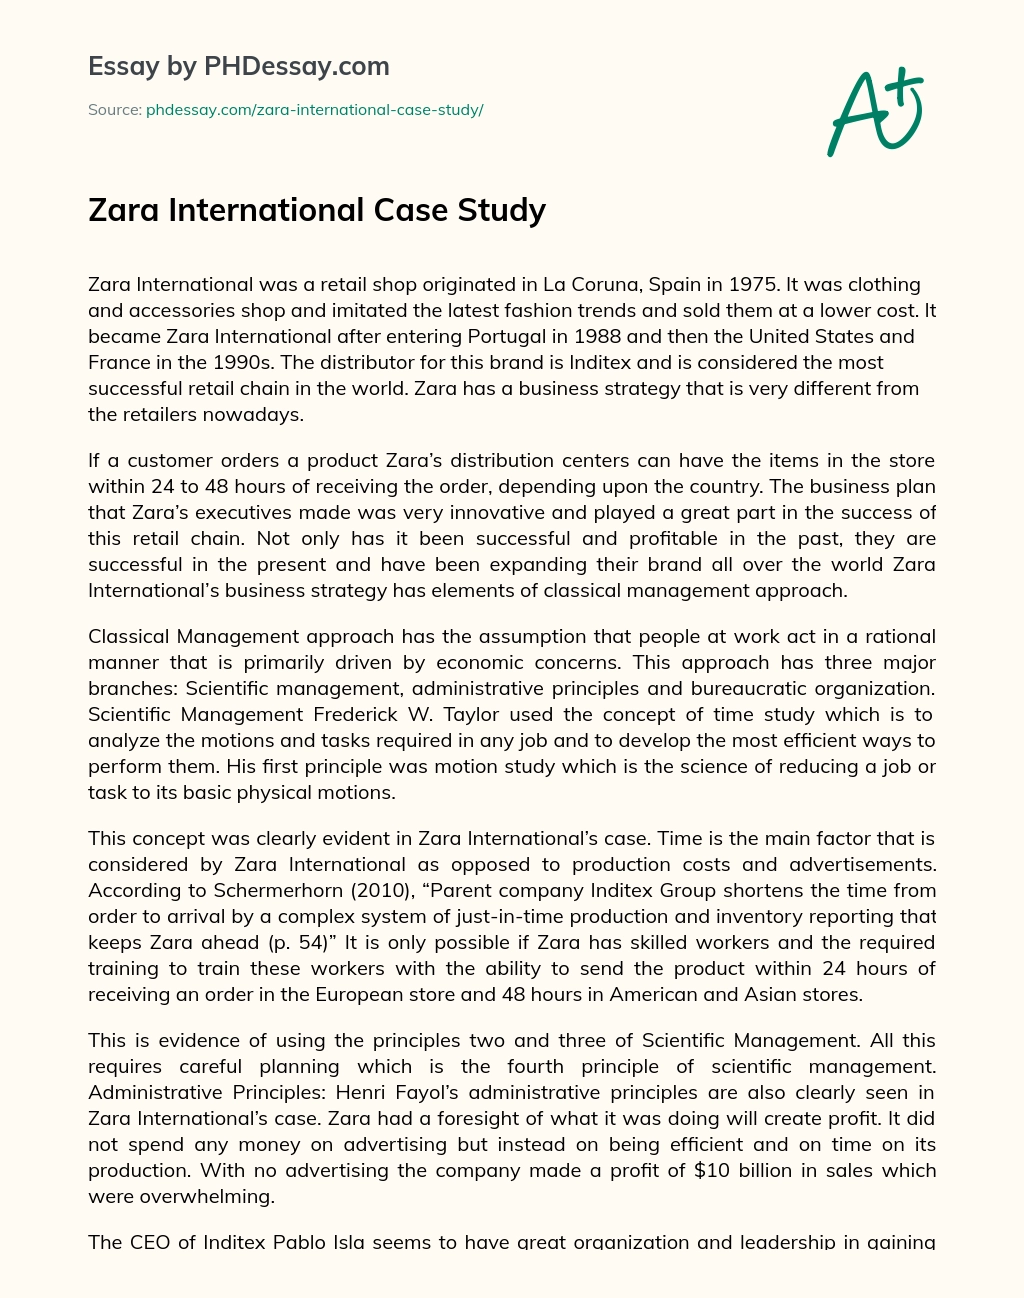 zara international case study